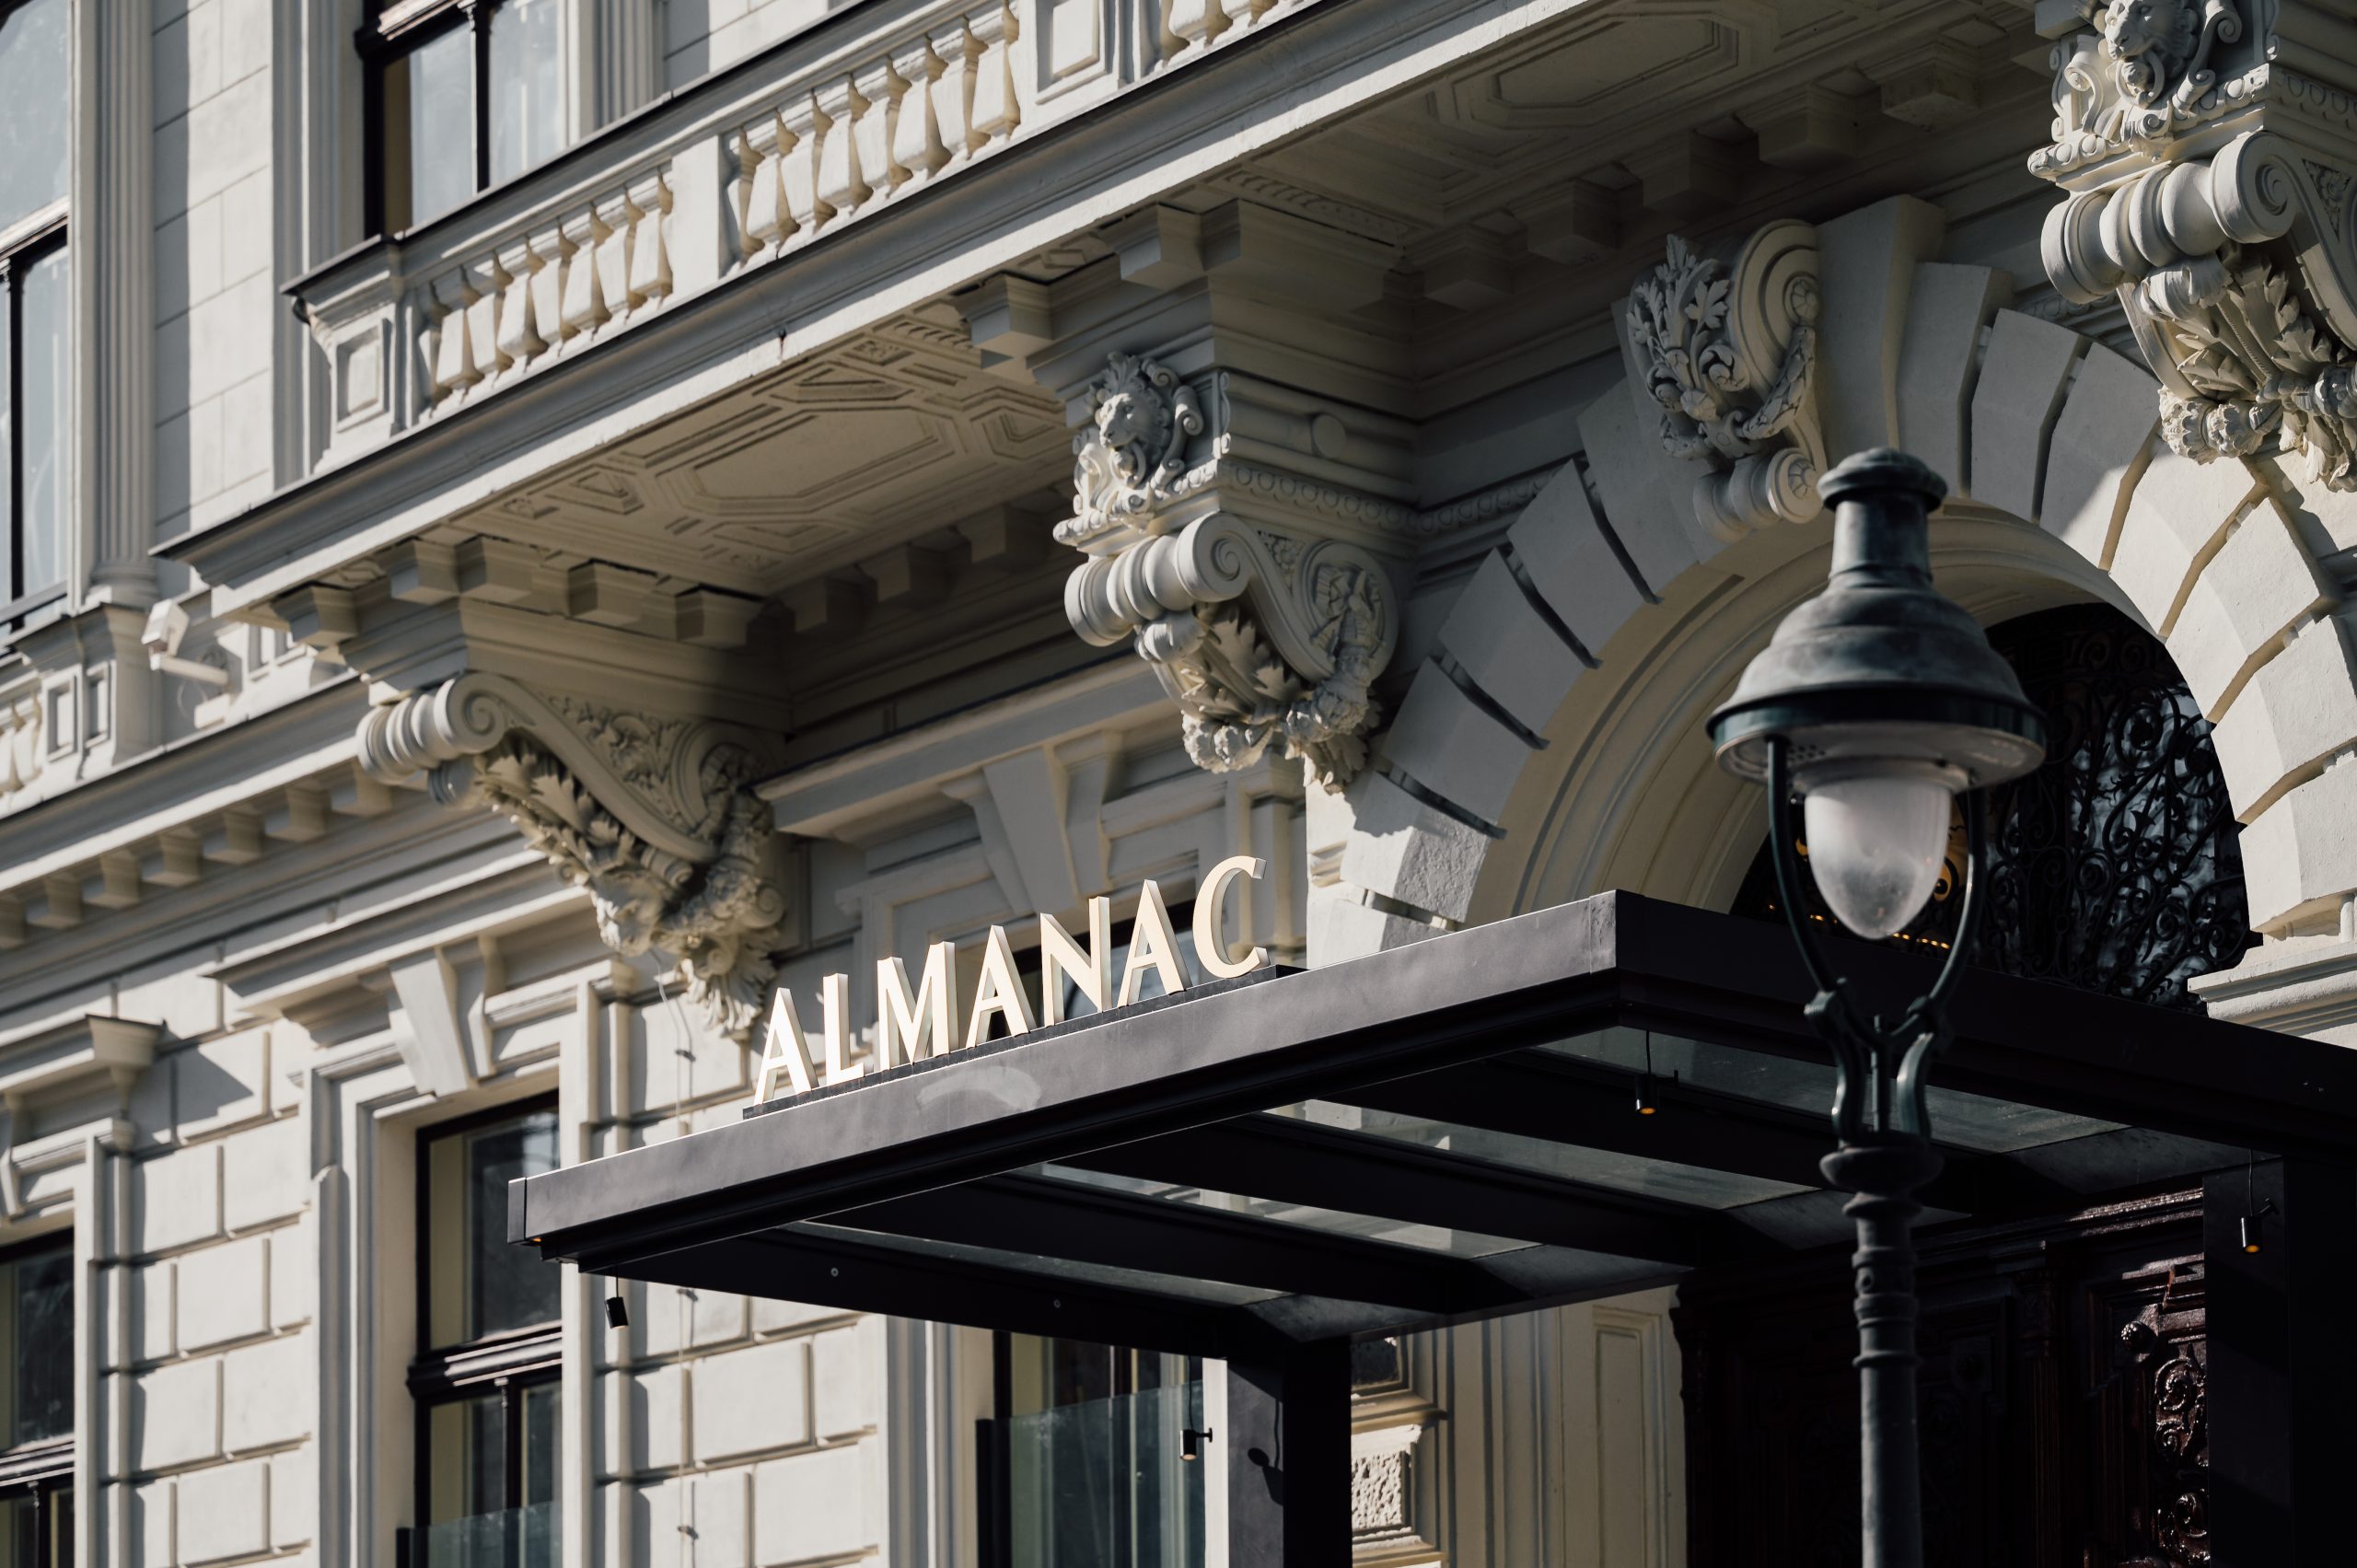 Almanac Palais Vienna